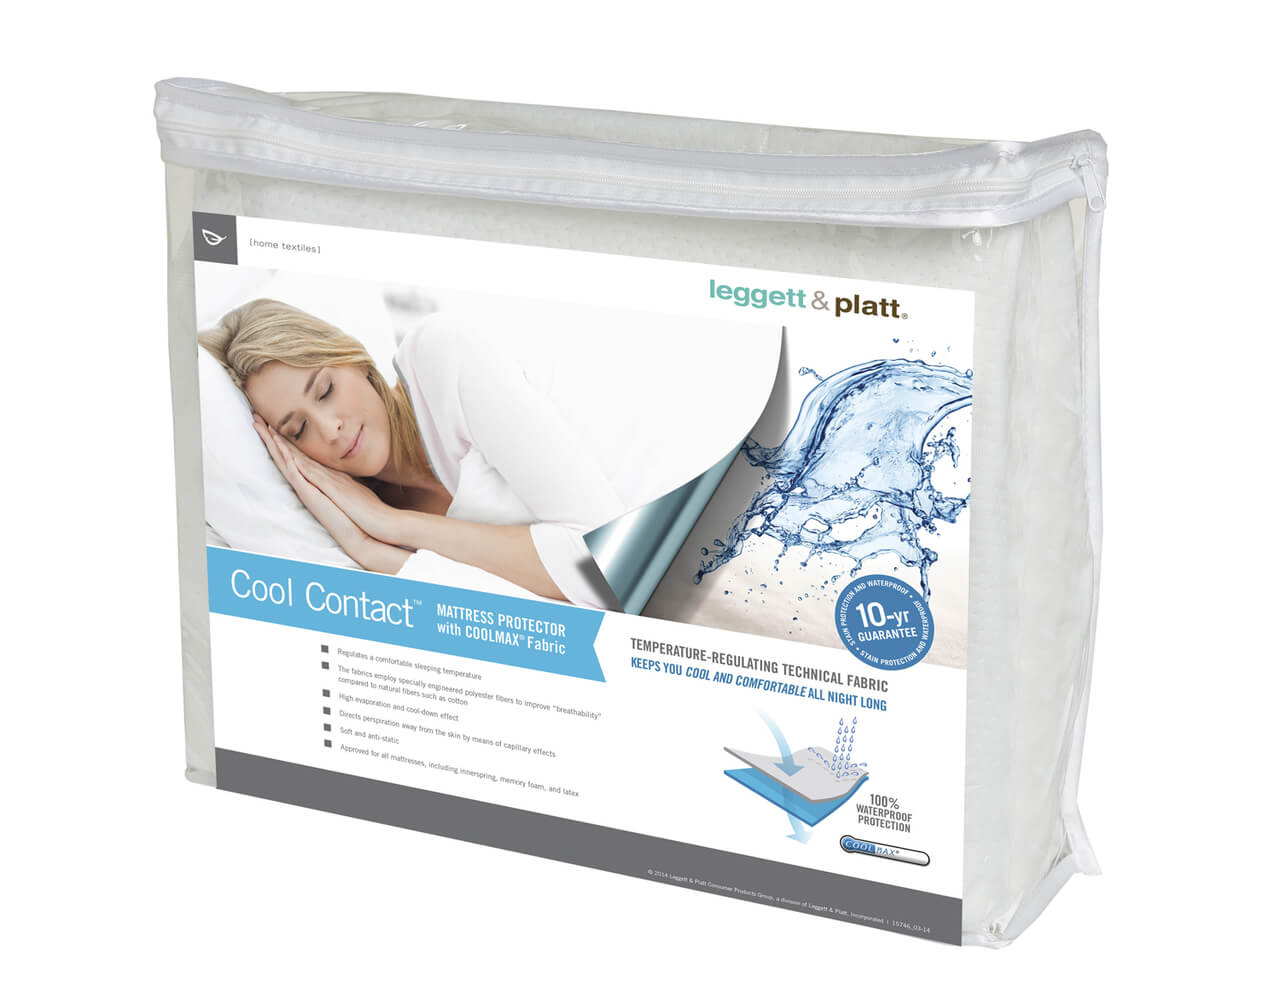 cool contact mattress protector